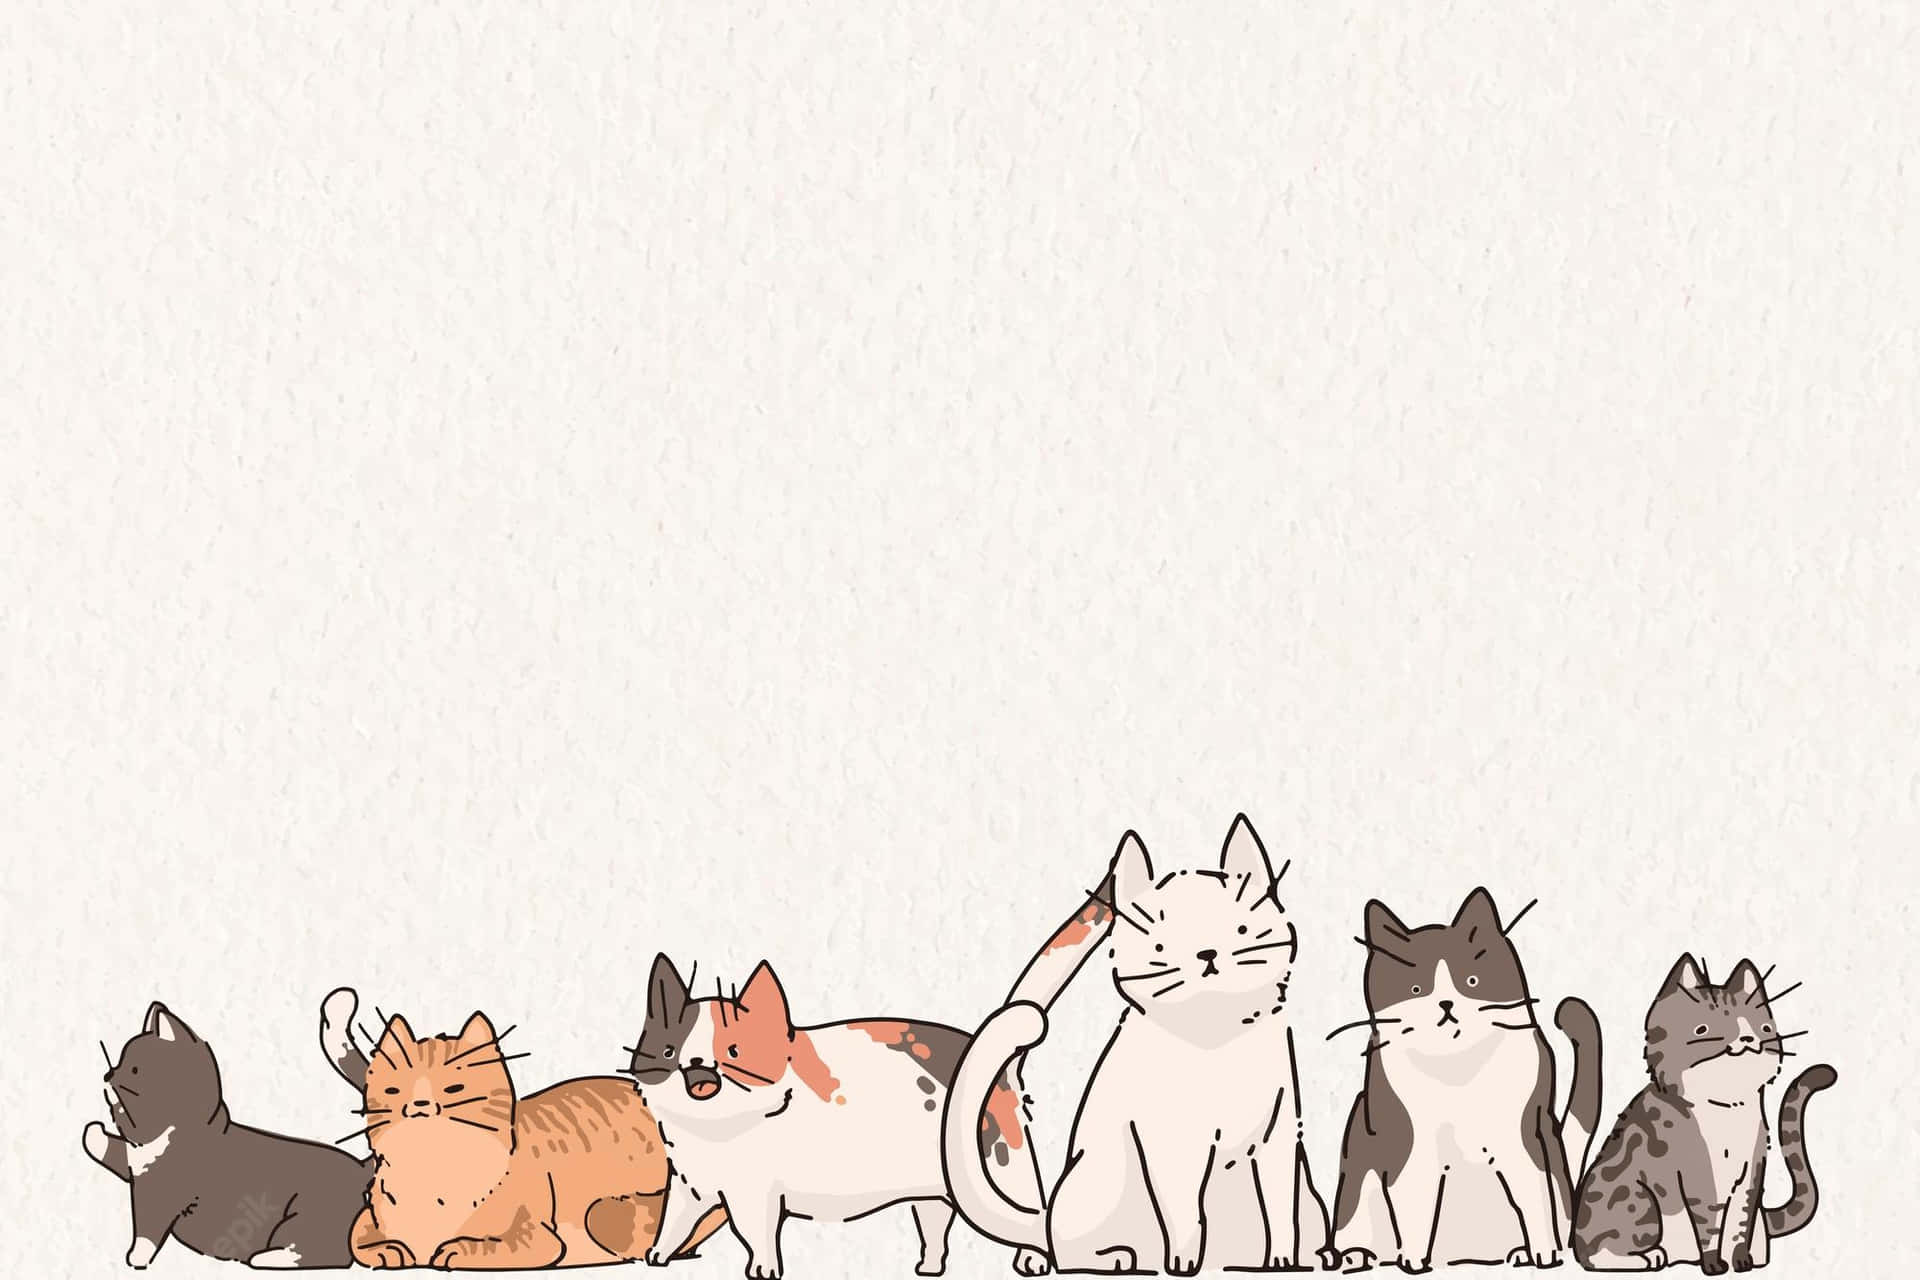 Adorable Cat Pattern Wallpaper